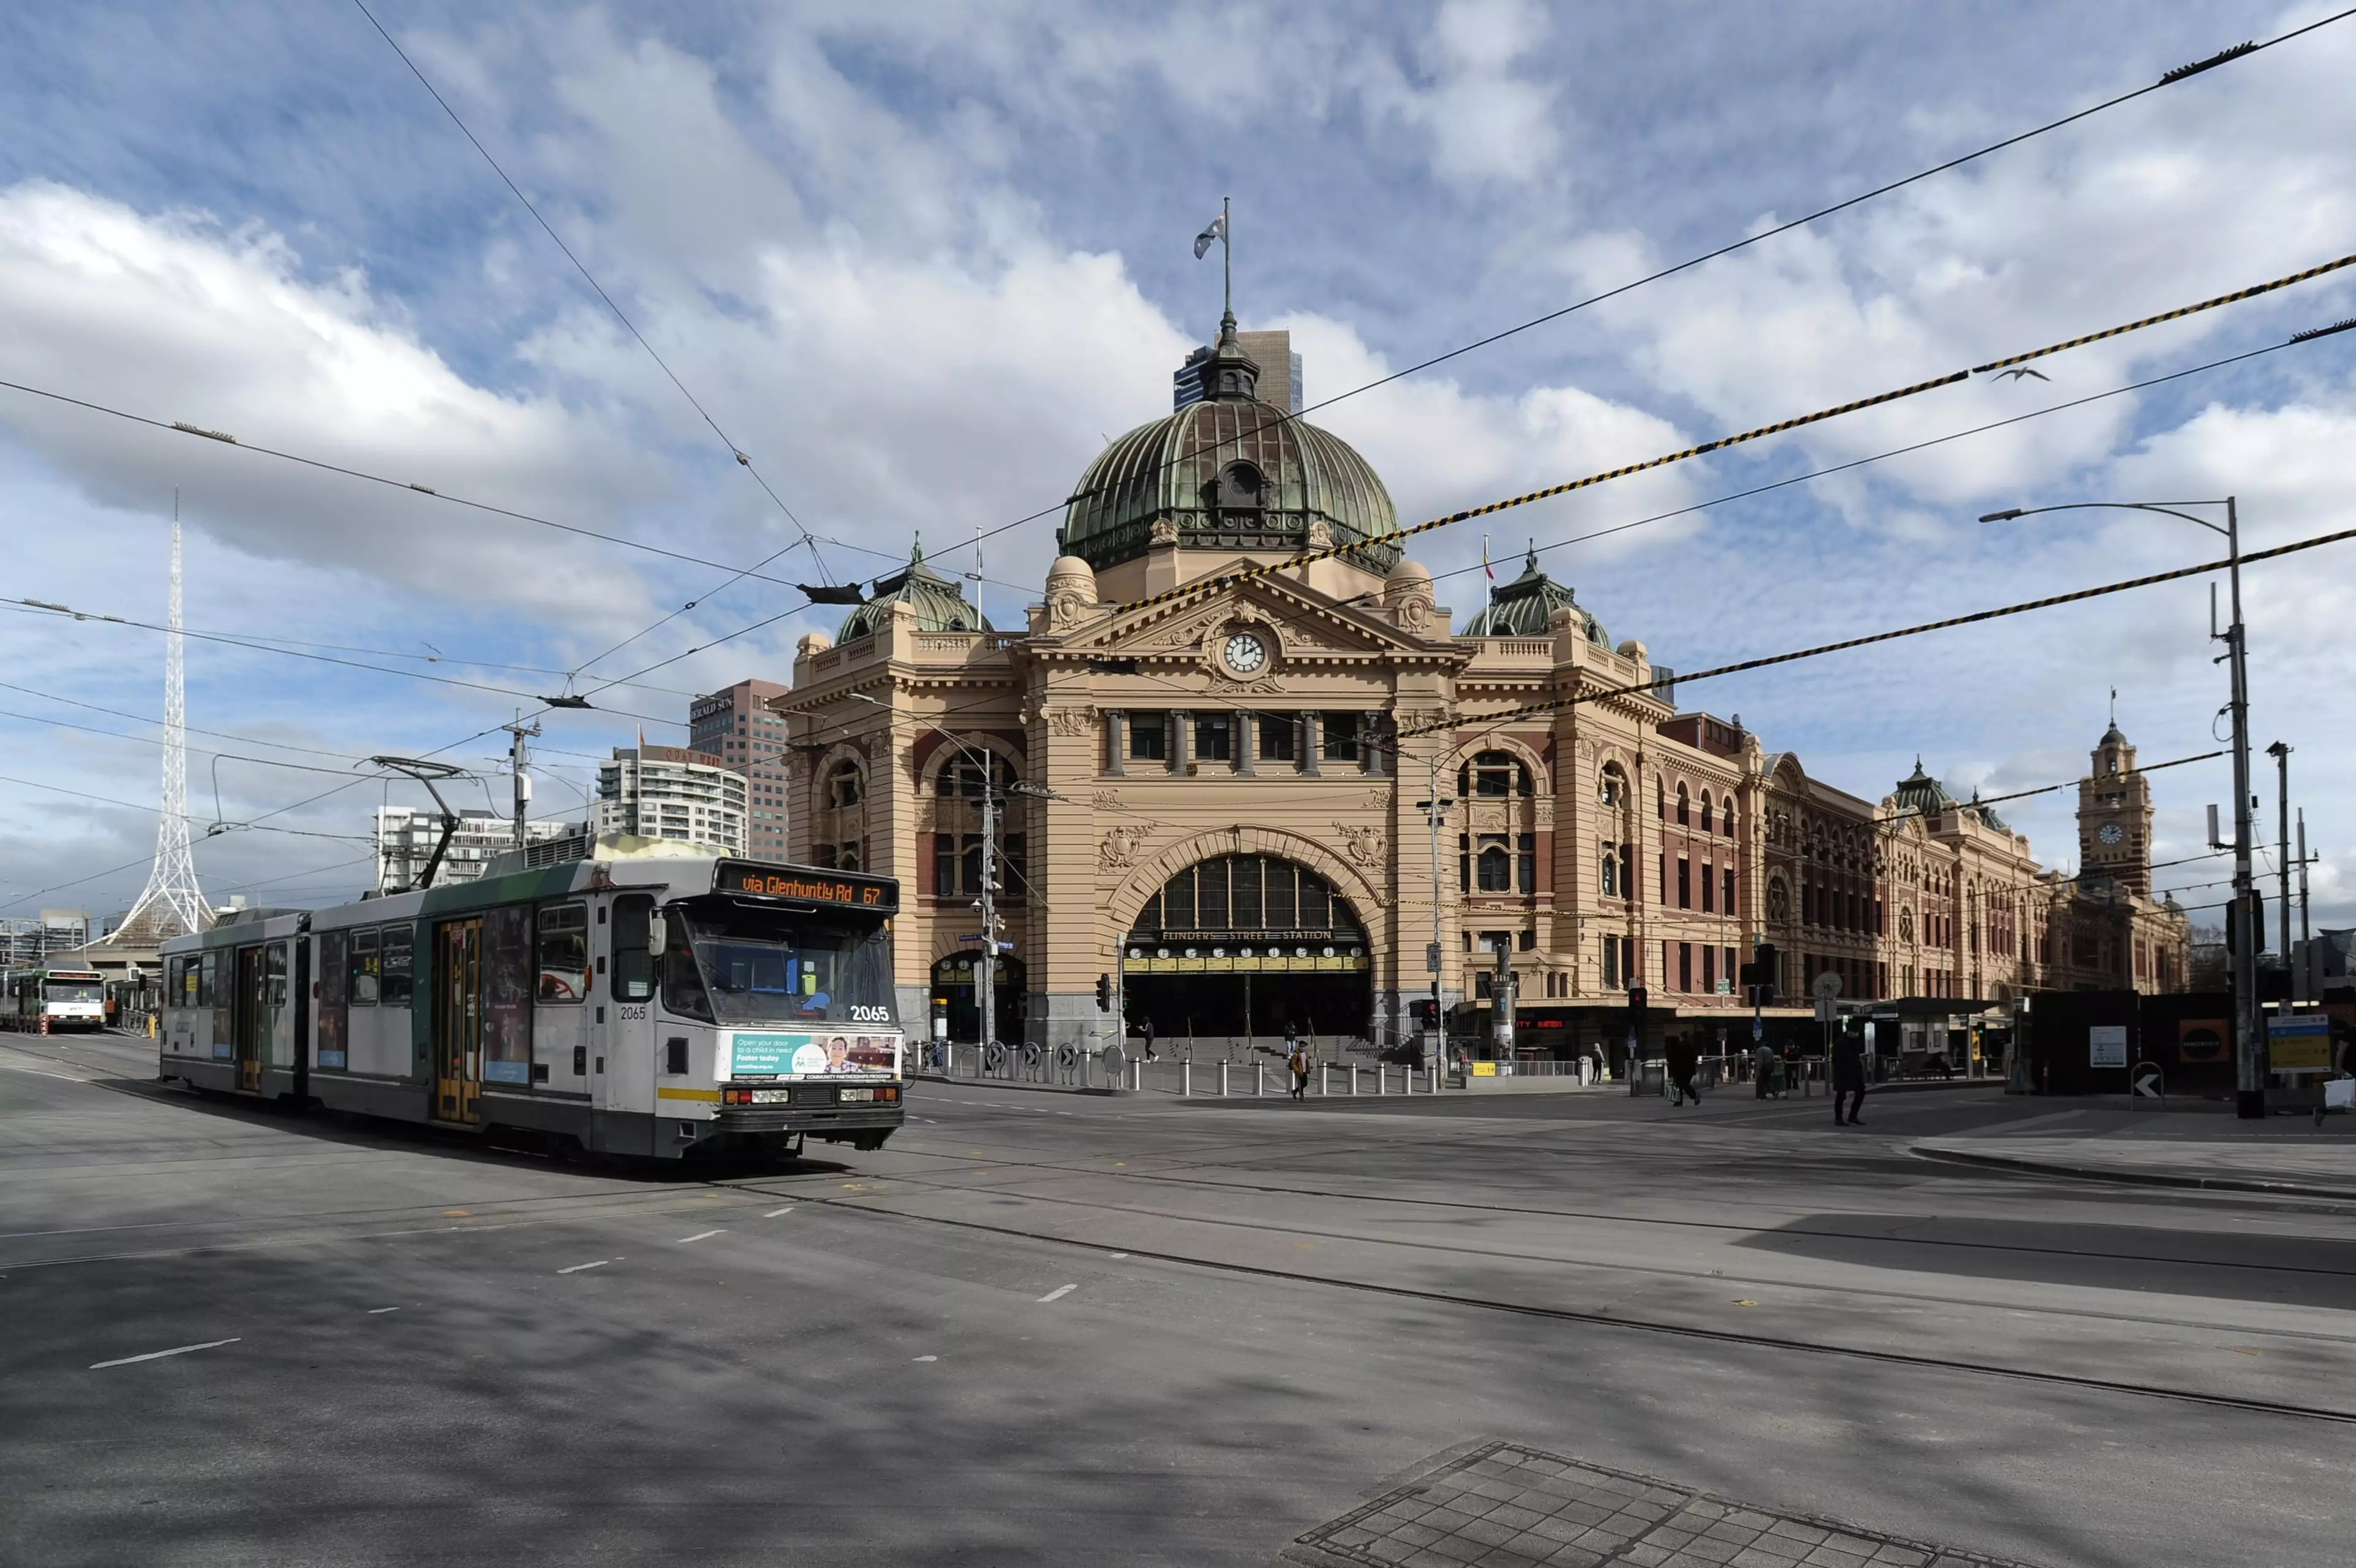 Restrictions Return In Melbourne After Hotel Worker Tests Positive For Covid-19